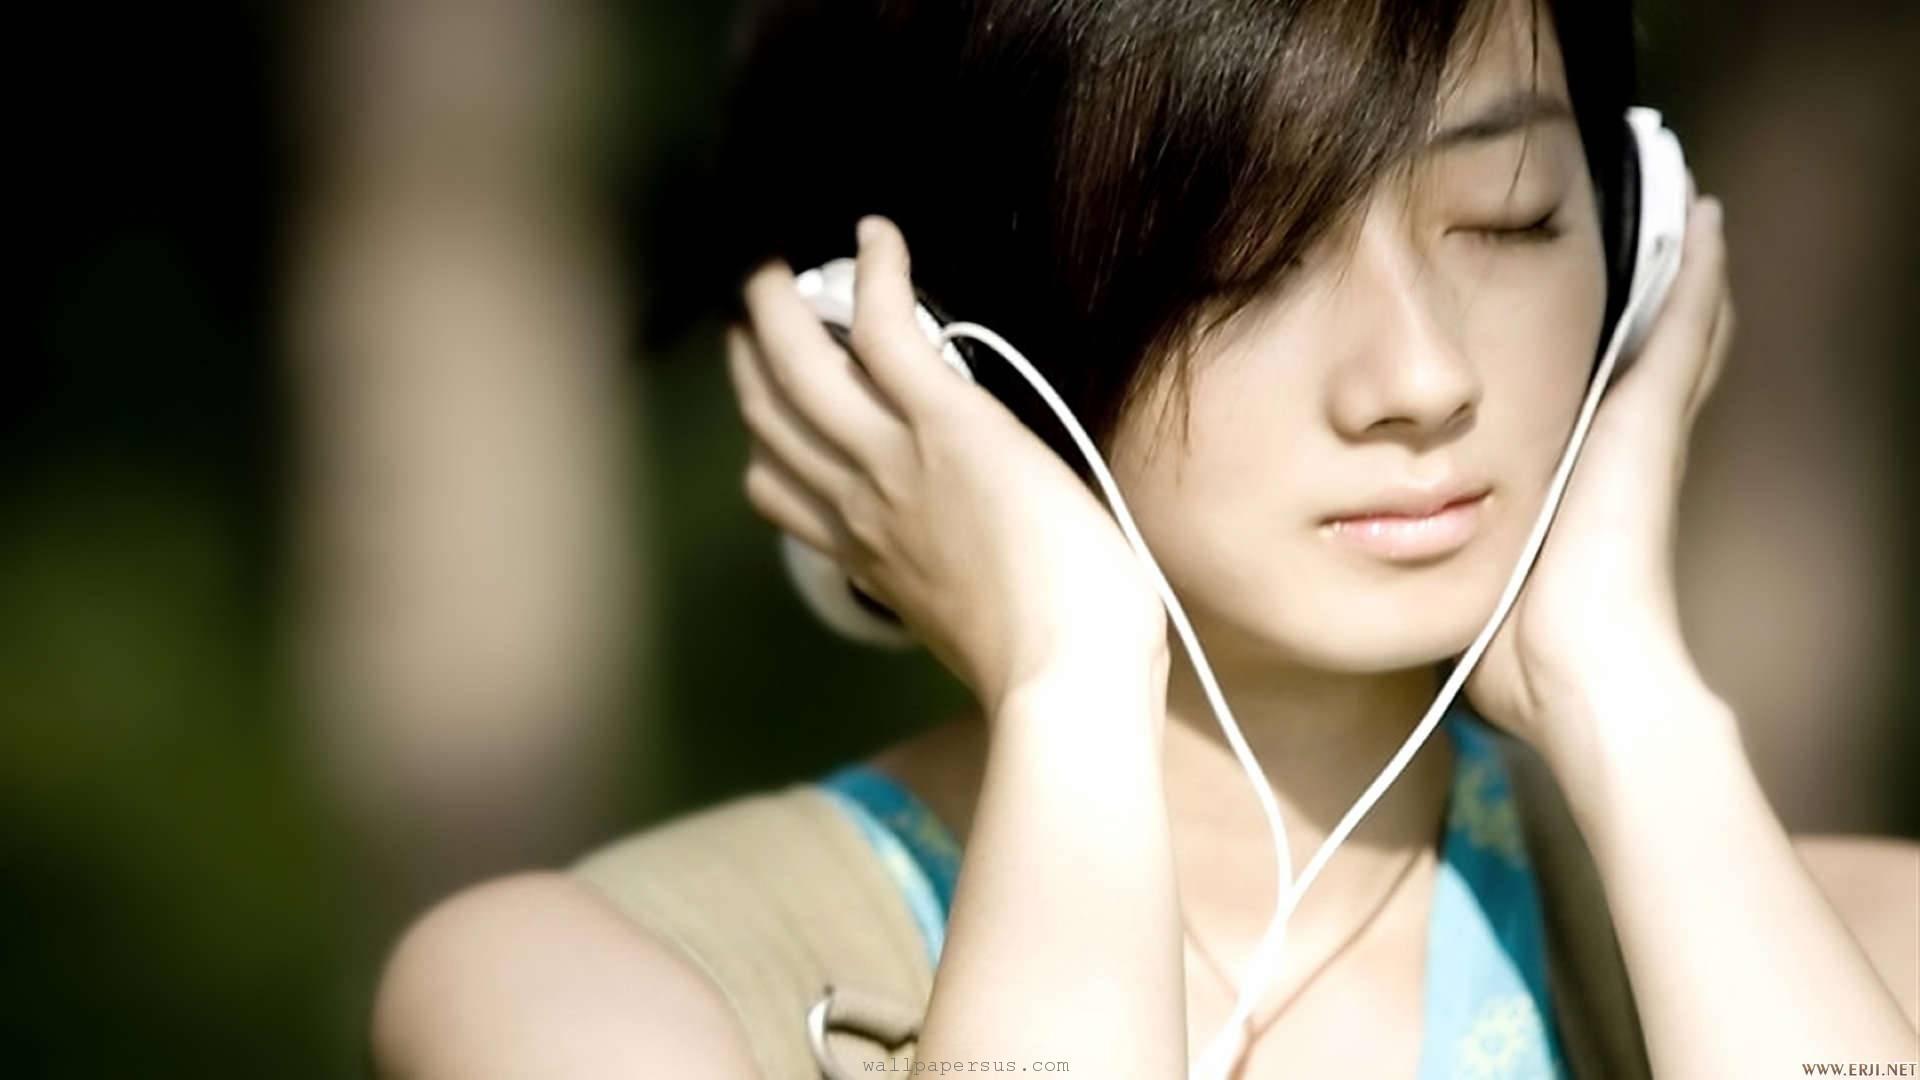 Beautiful girl with headphones wallpaper | (45313)